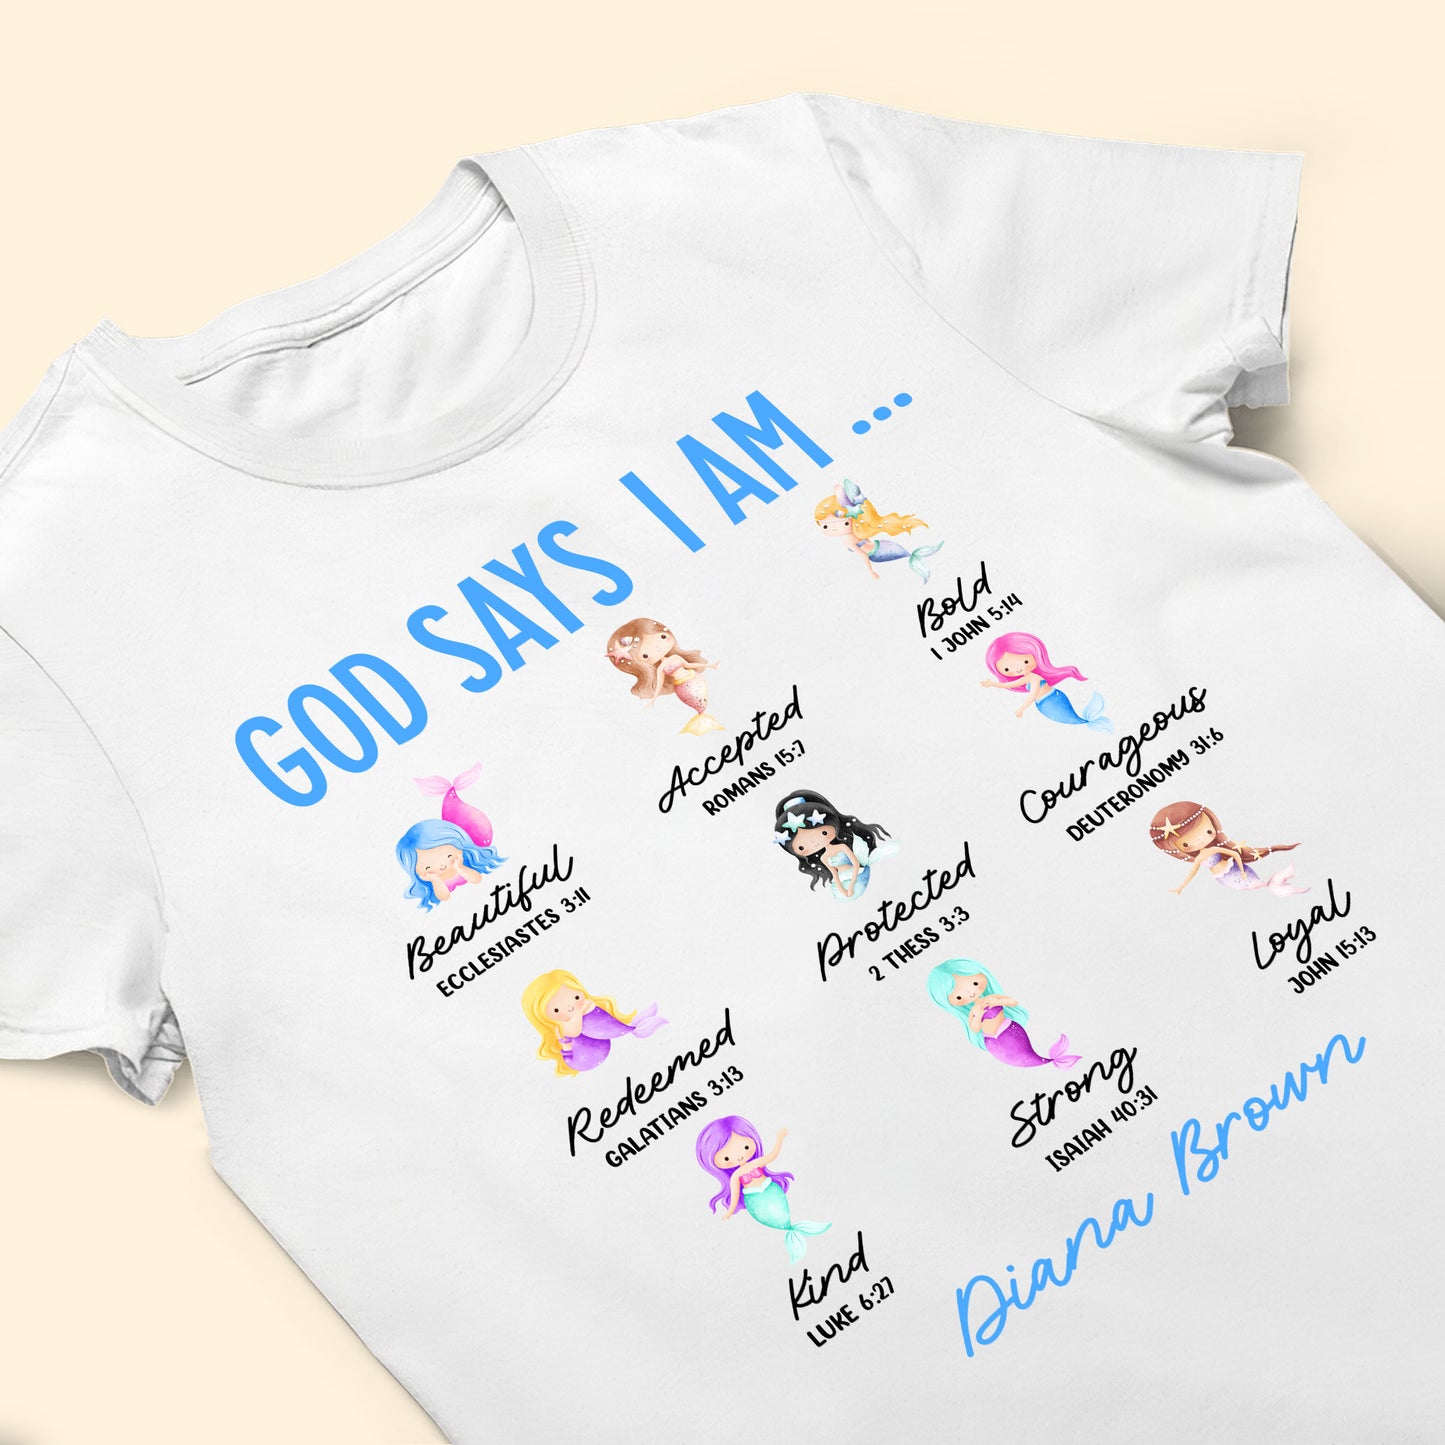 God Says I Am (Mermaid Ver.) - Personalized Shirt